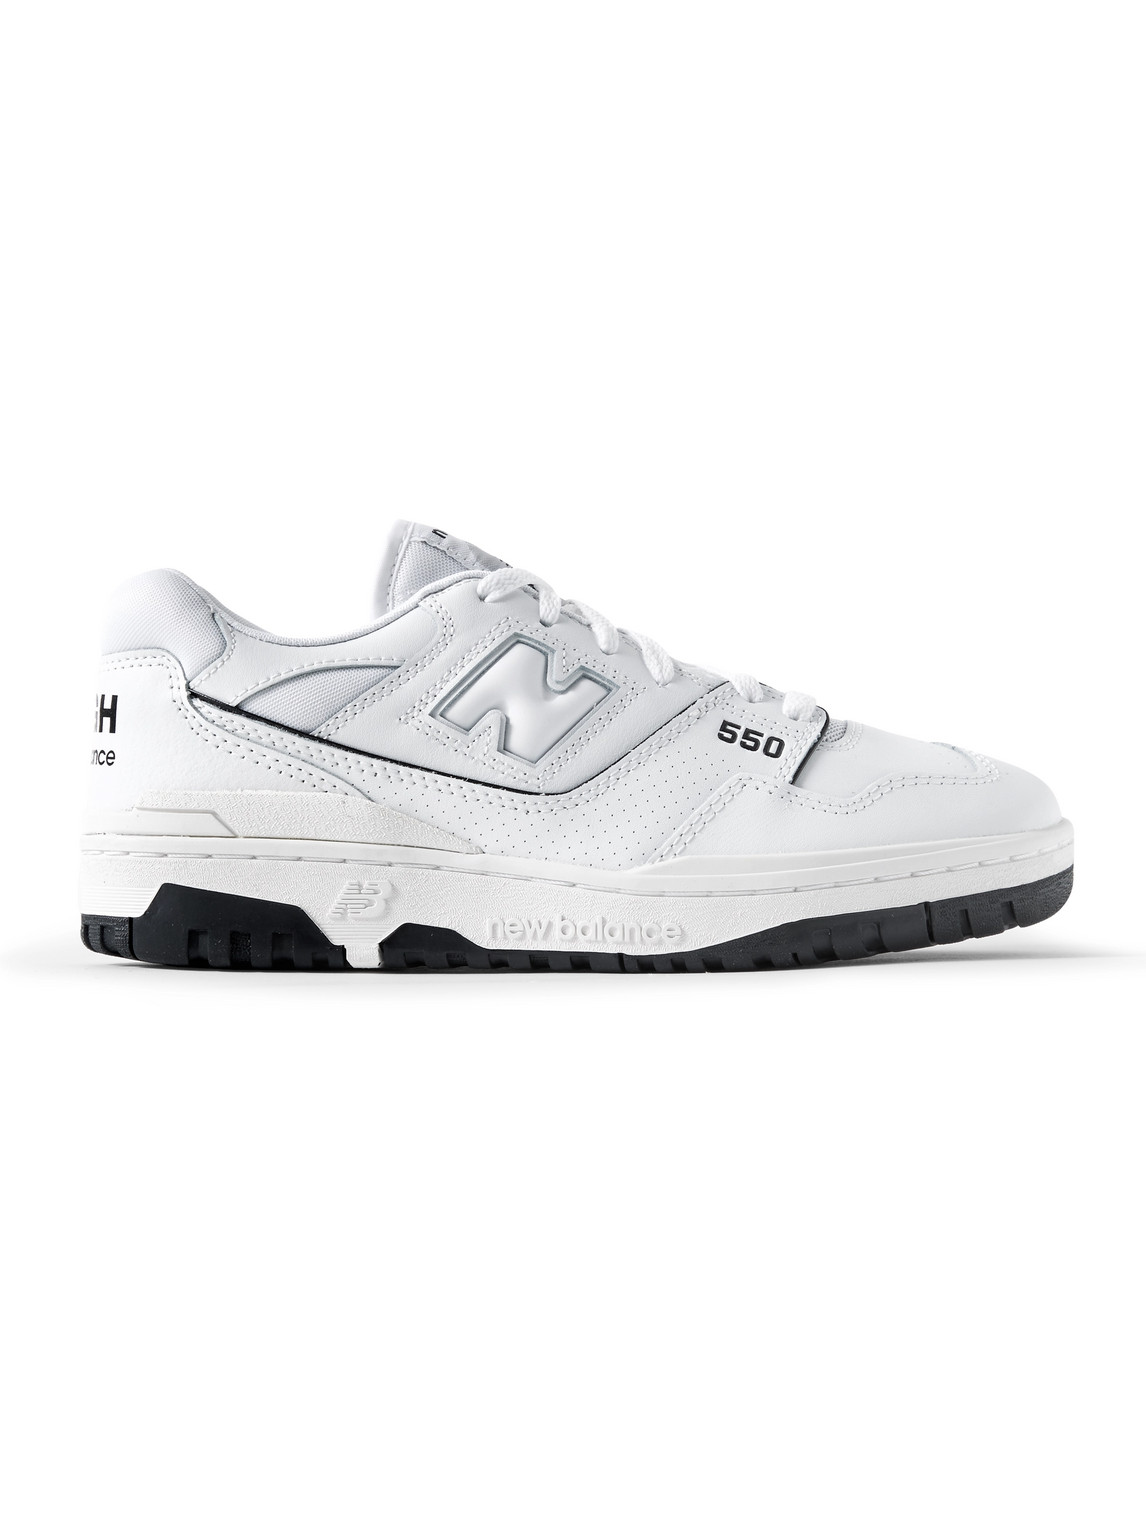 Comme Des Garçons Homme Deux X New Balance 550 Sneakers In White | ModeSens